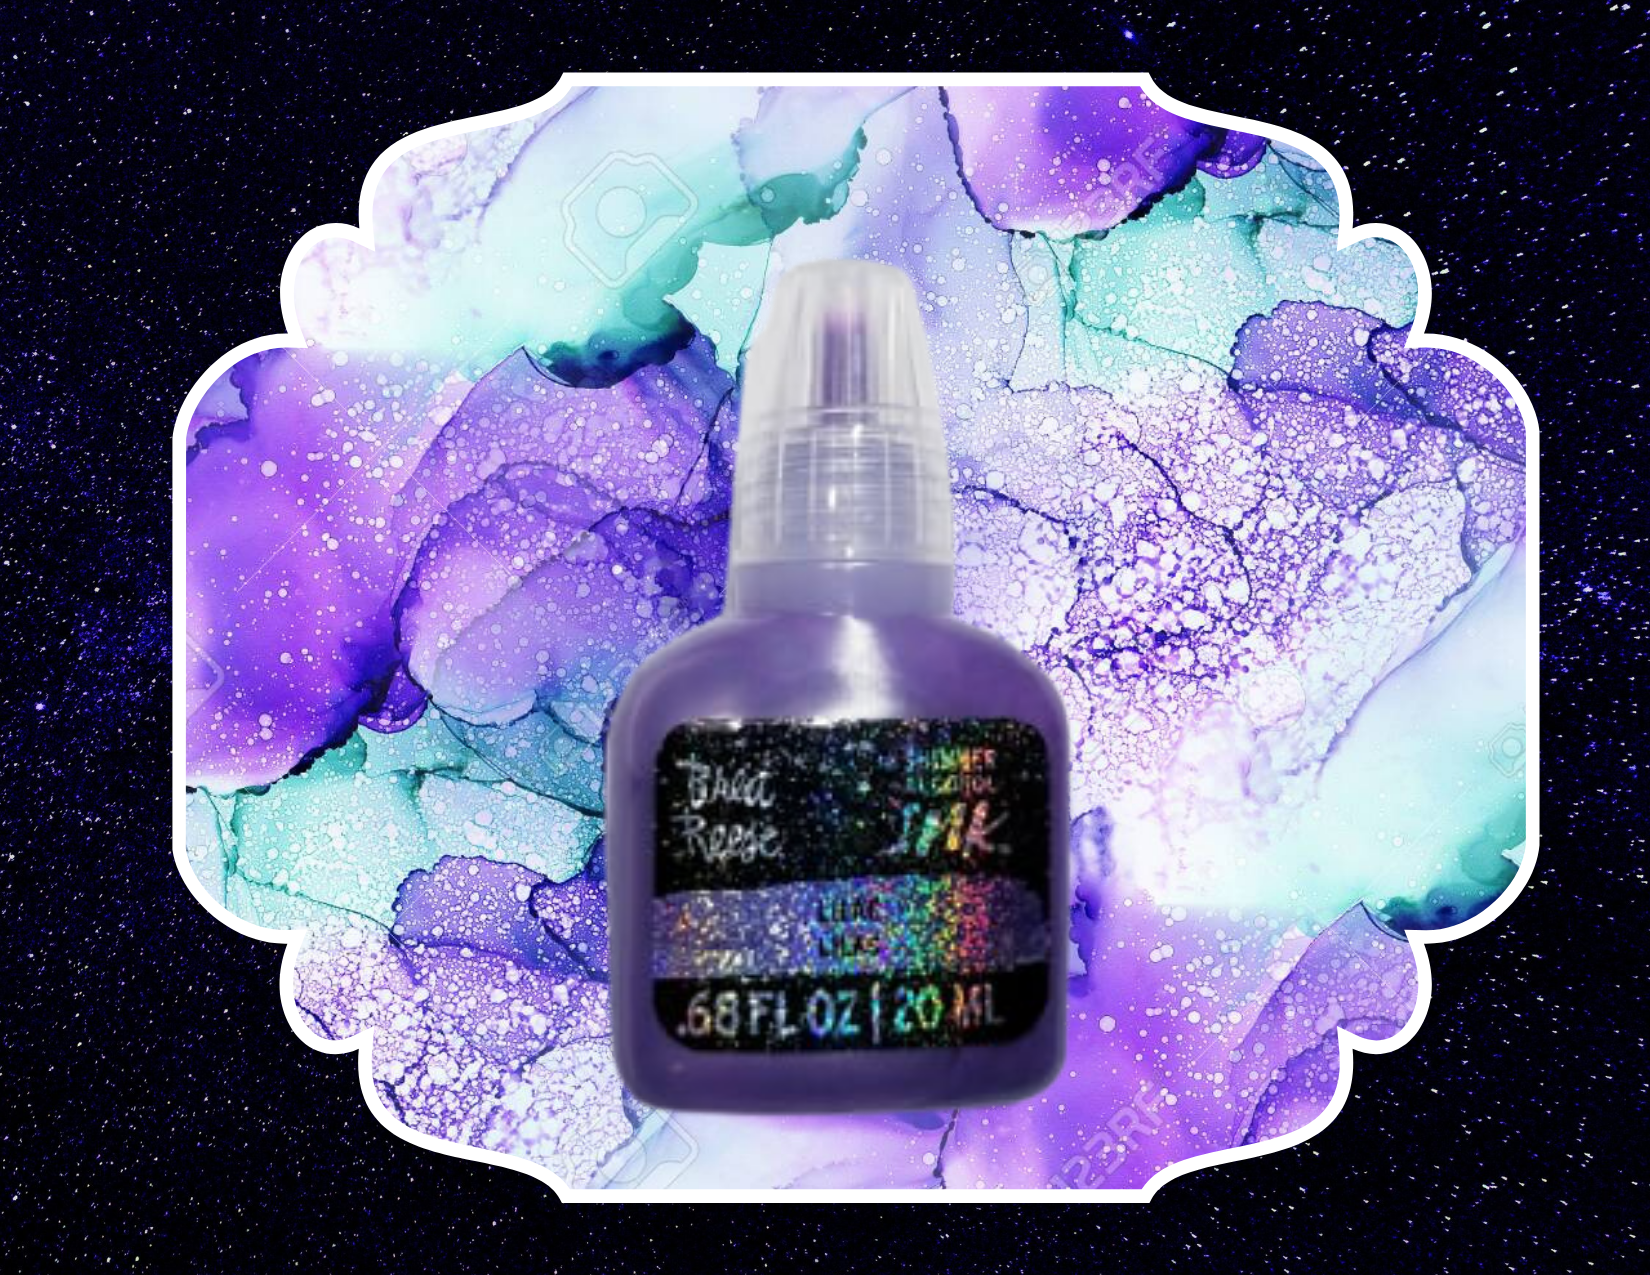 Brea Reese Shimmer Alcohol Ink – Purple Moon Glitters